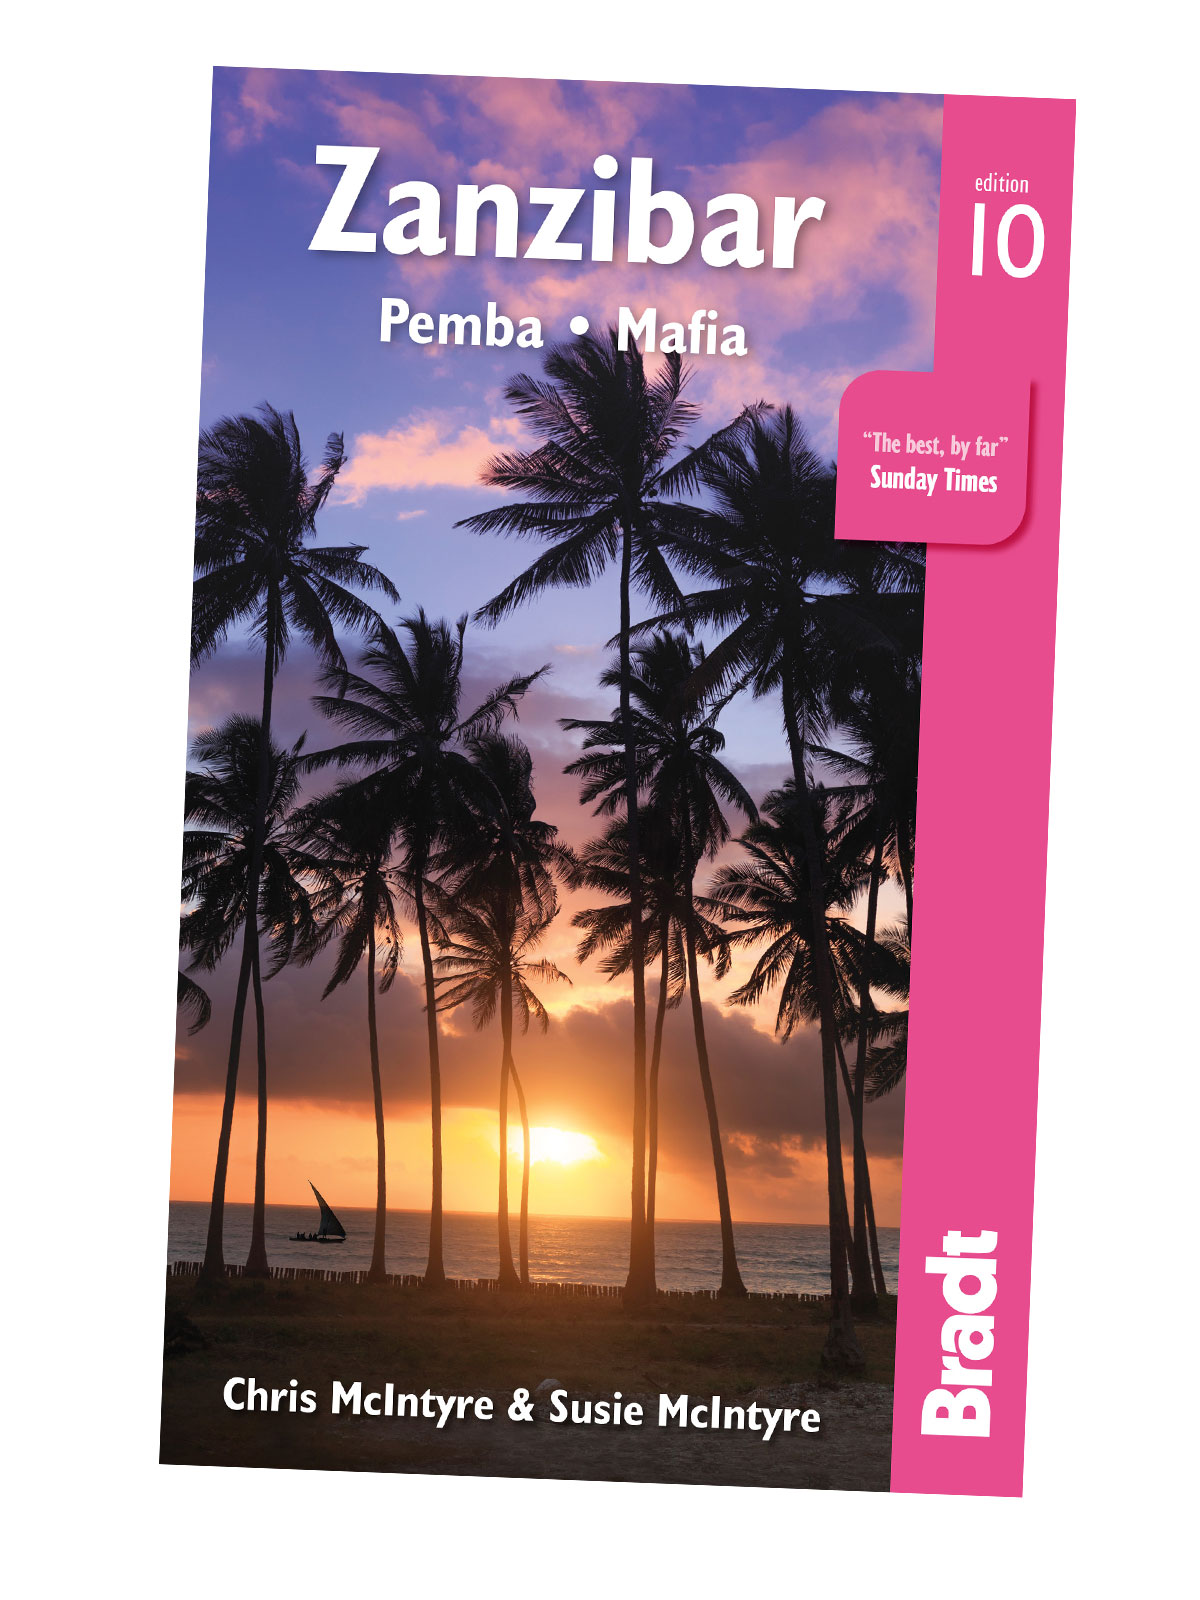 Zanzibar reiseguide